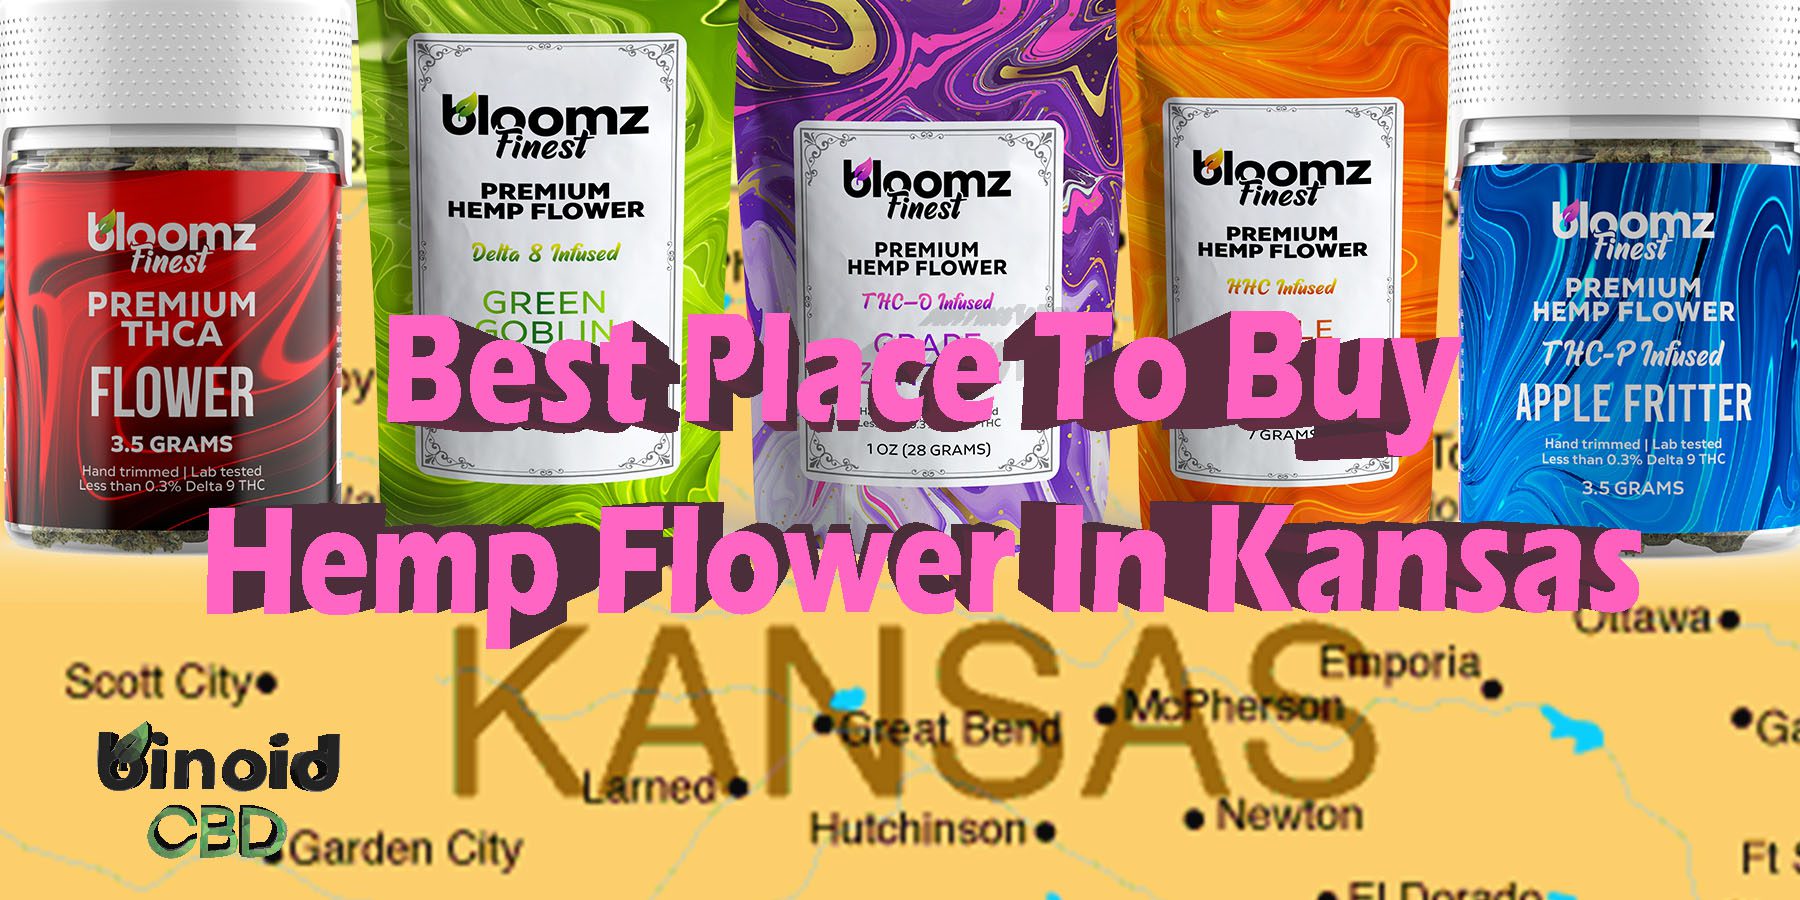 Buy Hemp Flower Kansas Pre Rolls Get Online Near Me For Sale Best Brand Strongest Real Legal Store Shop Reddit